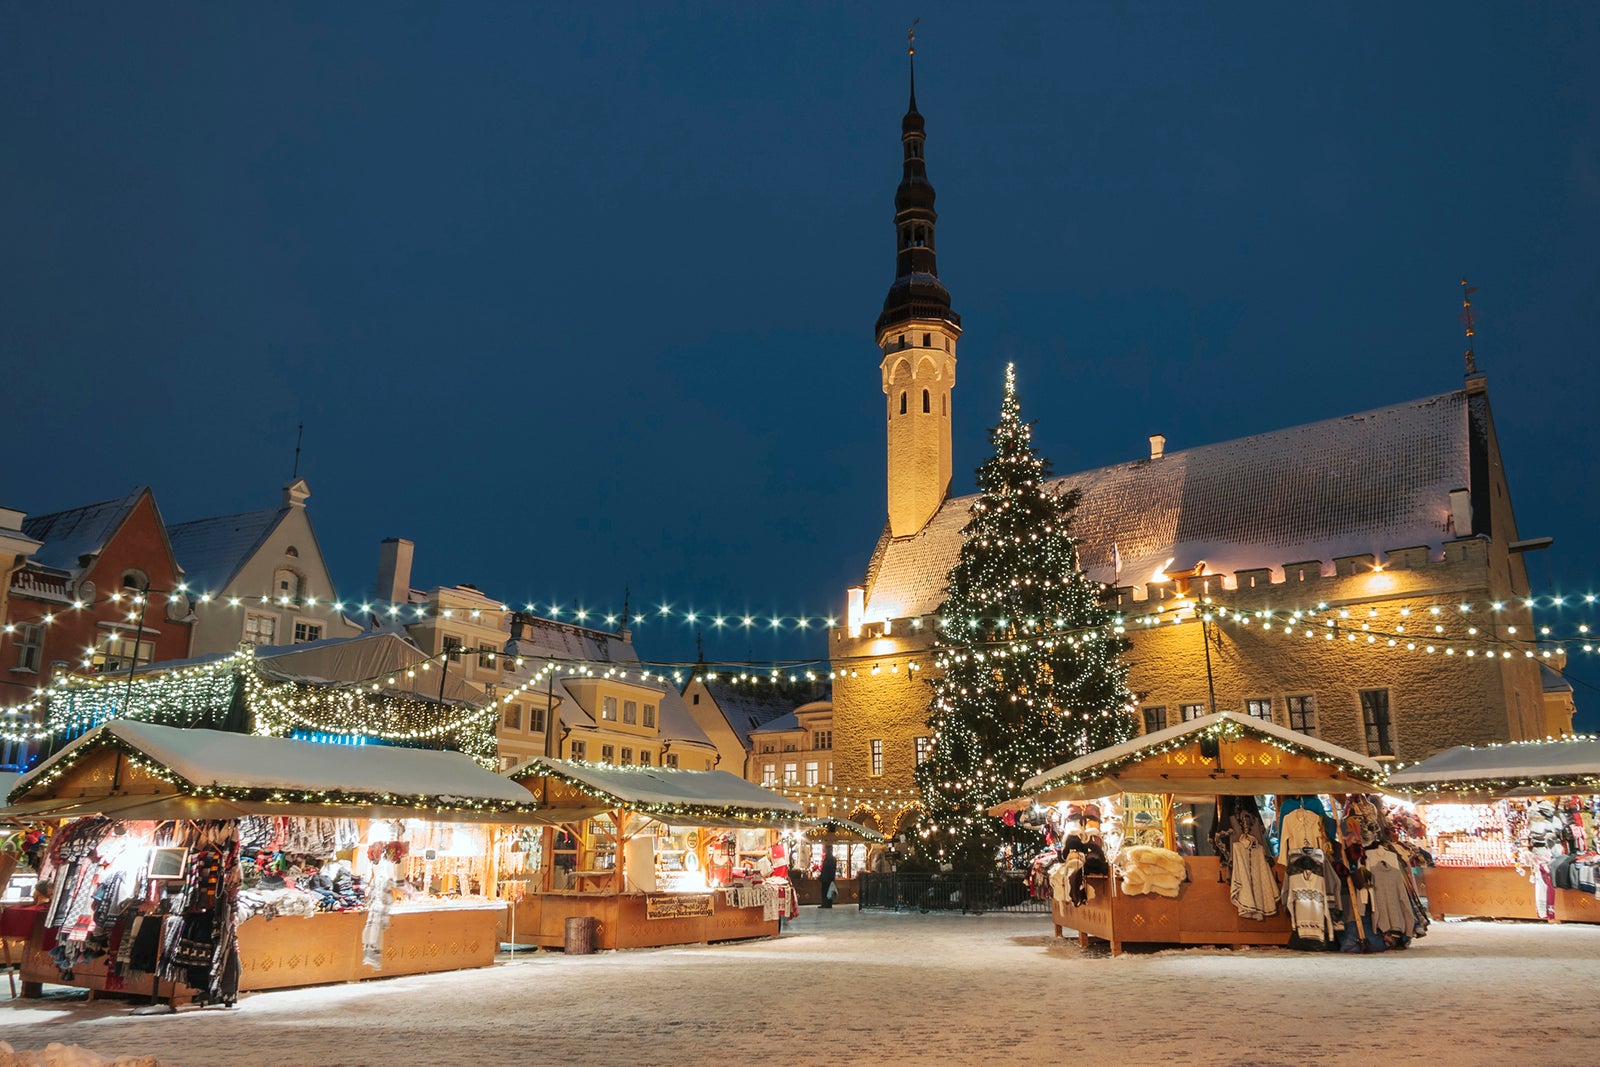 Estonia's Christmas markets